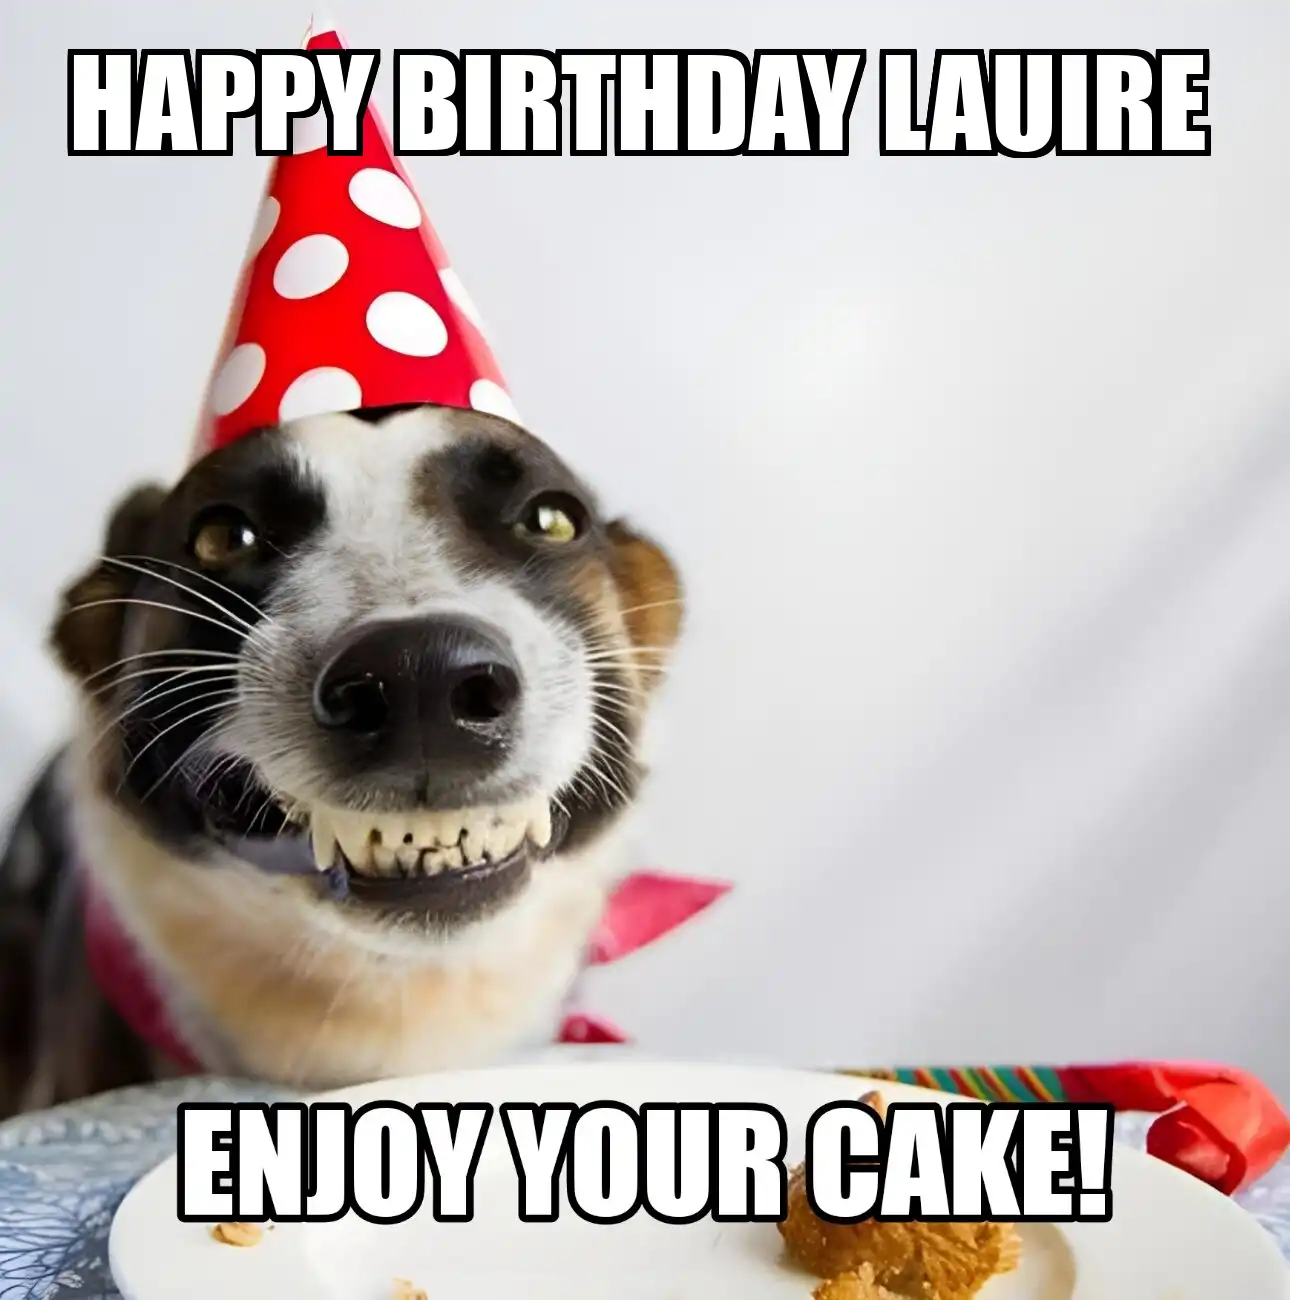 Happy Birthday Lauire Enjoy Your Cake Dog Meme